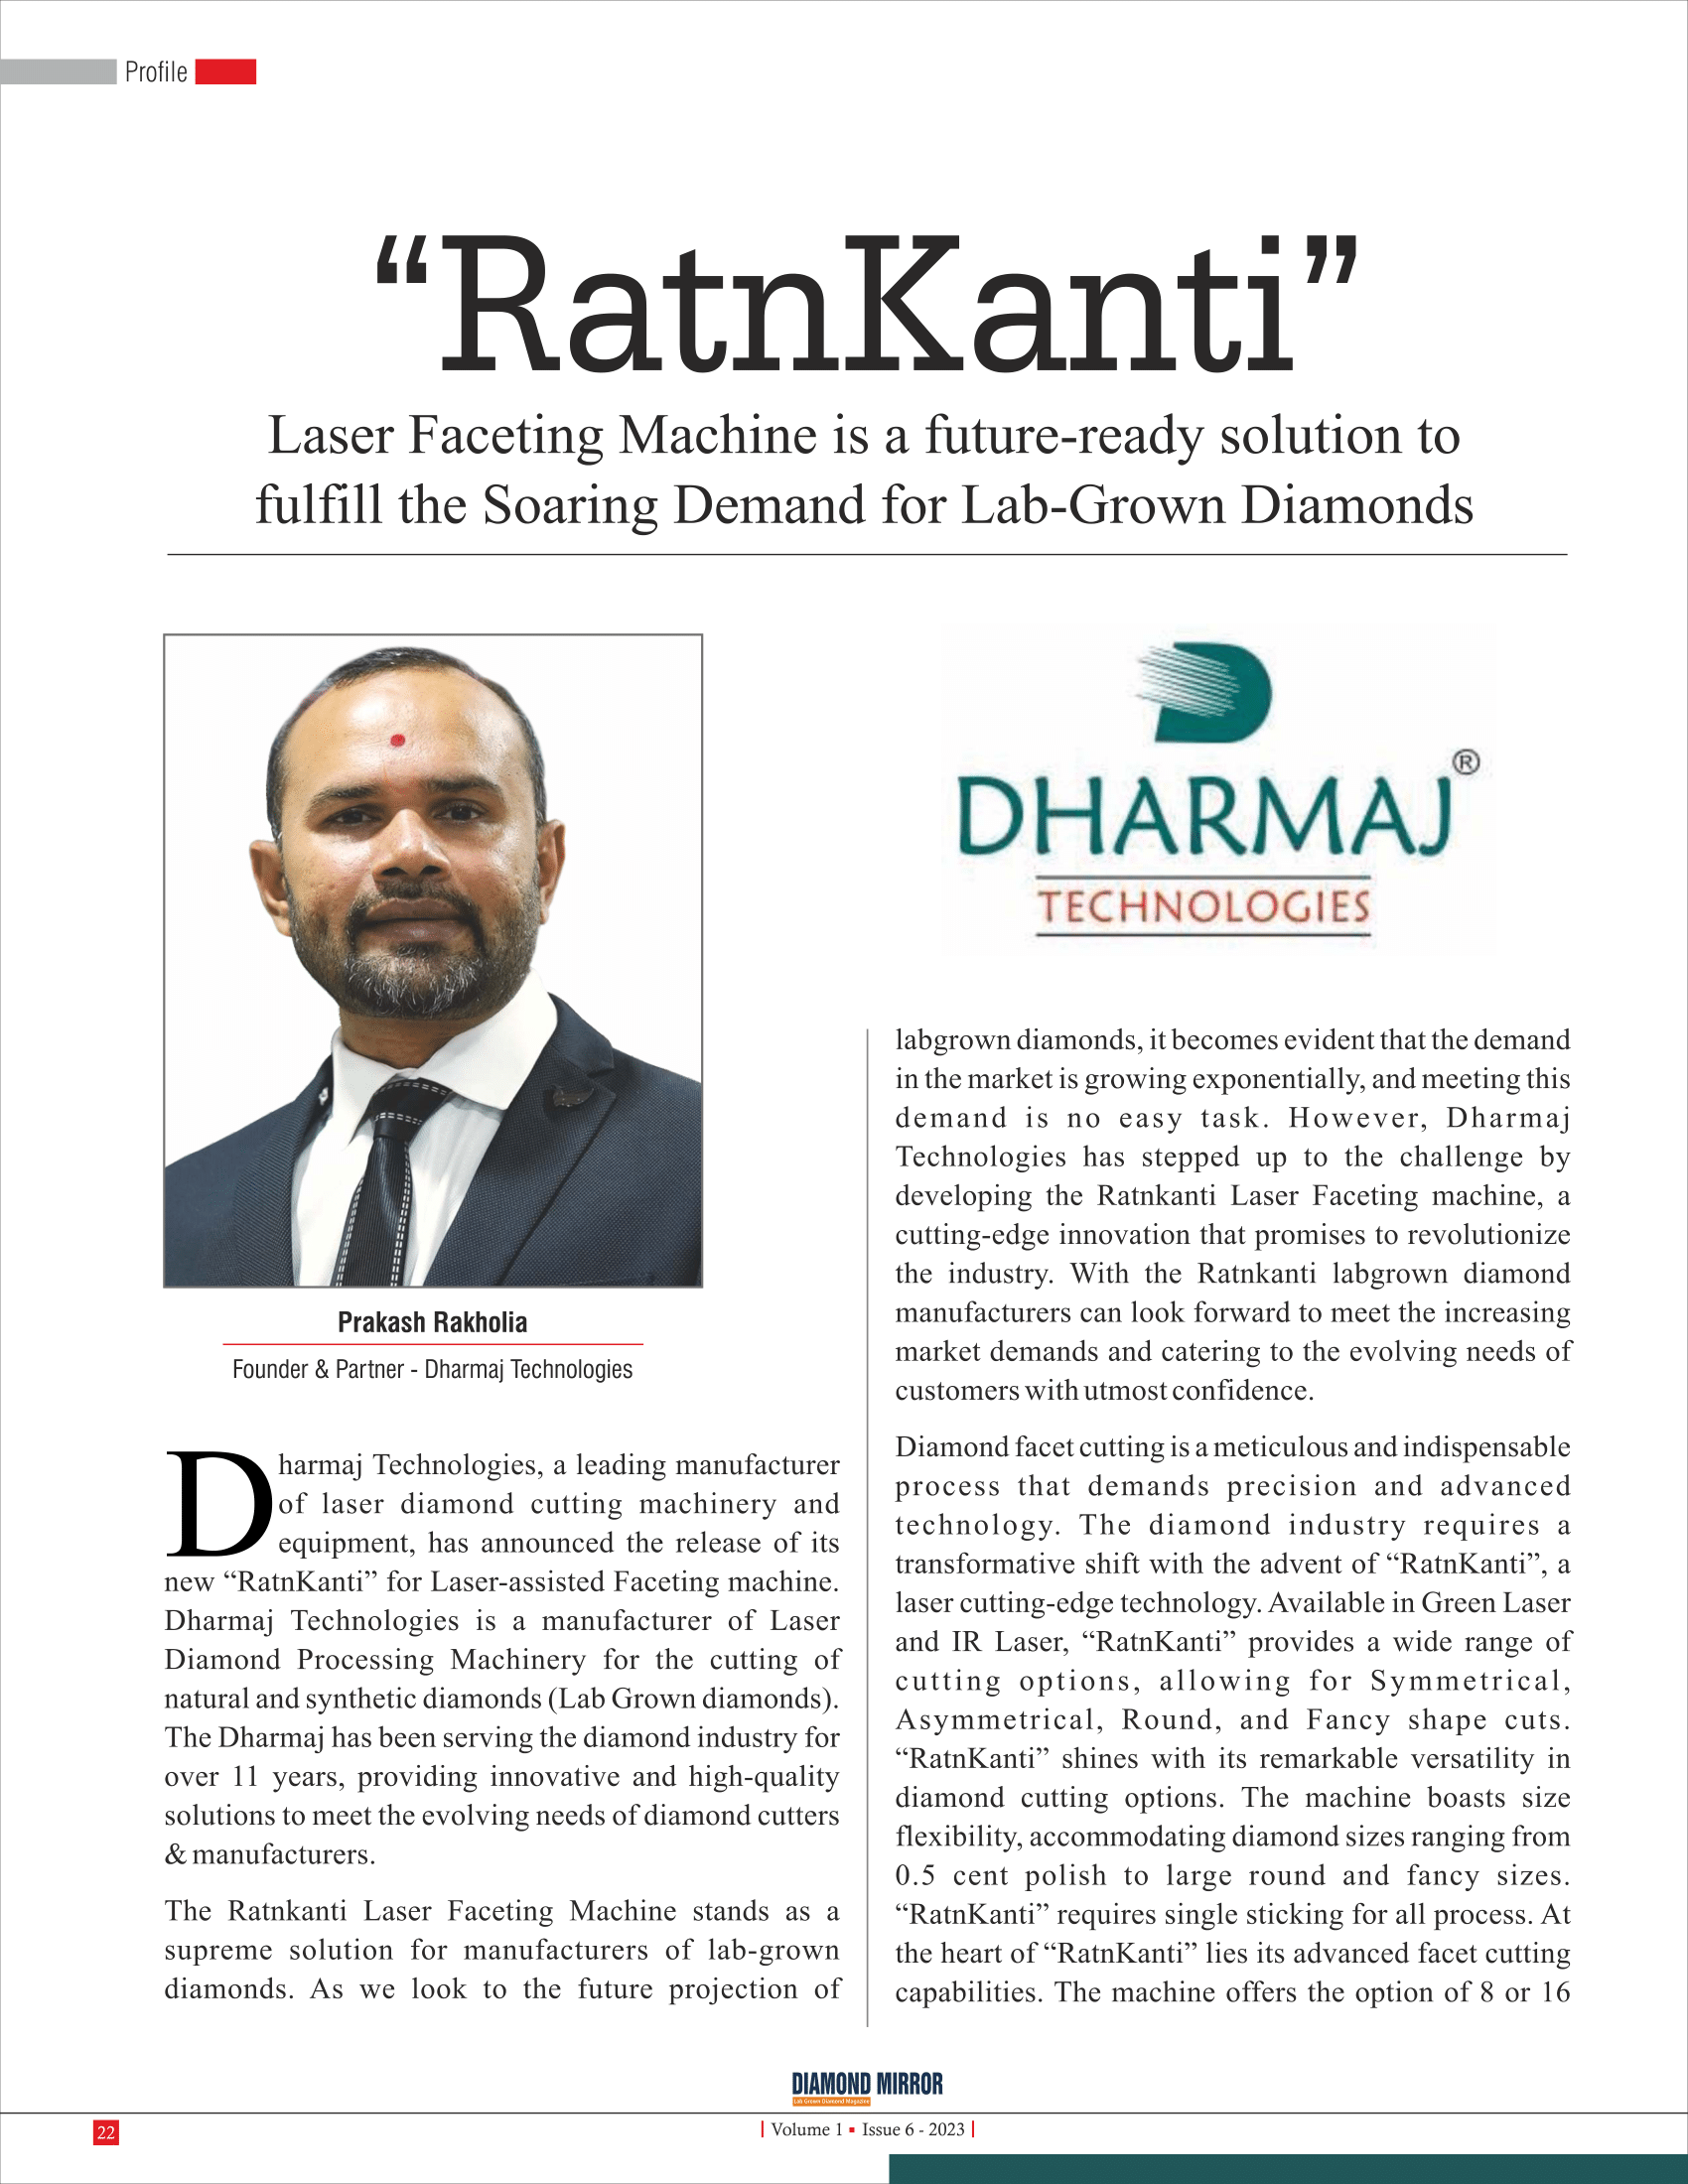 Ratnkanti for CVD